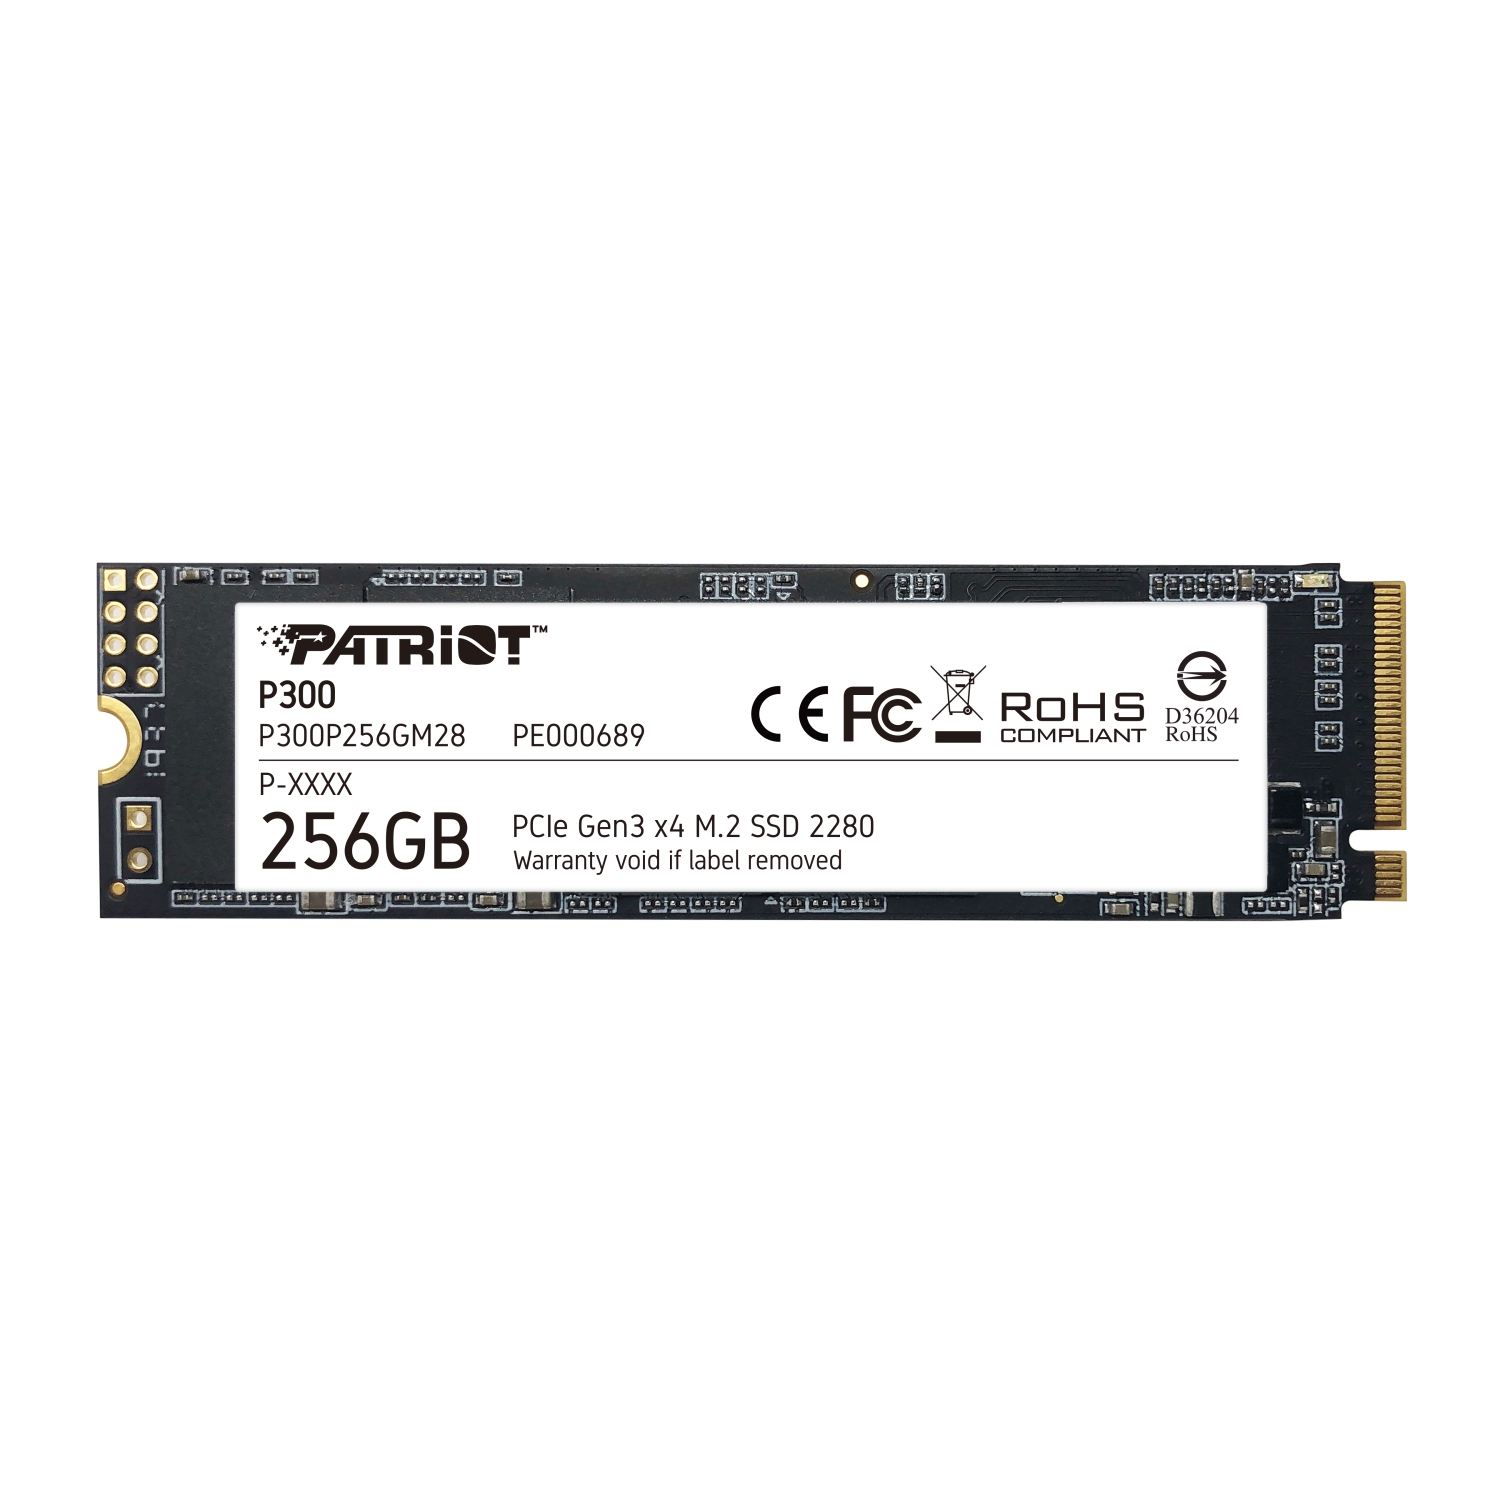 Patriot P300 256GB Internal SSD - NVMe PCIe Gen 3x4 - M.2 2280 - Solid State Drive - P300P256GM28